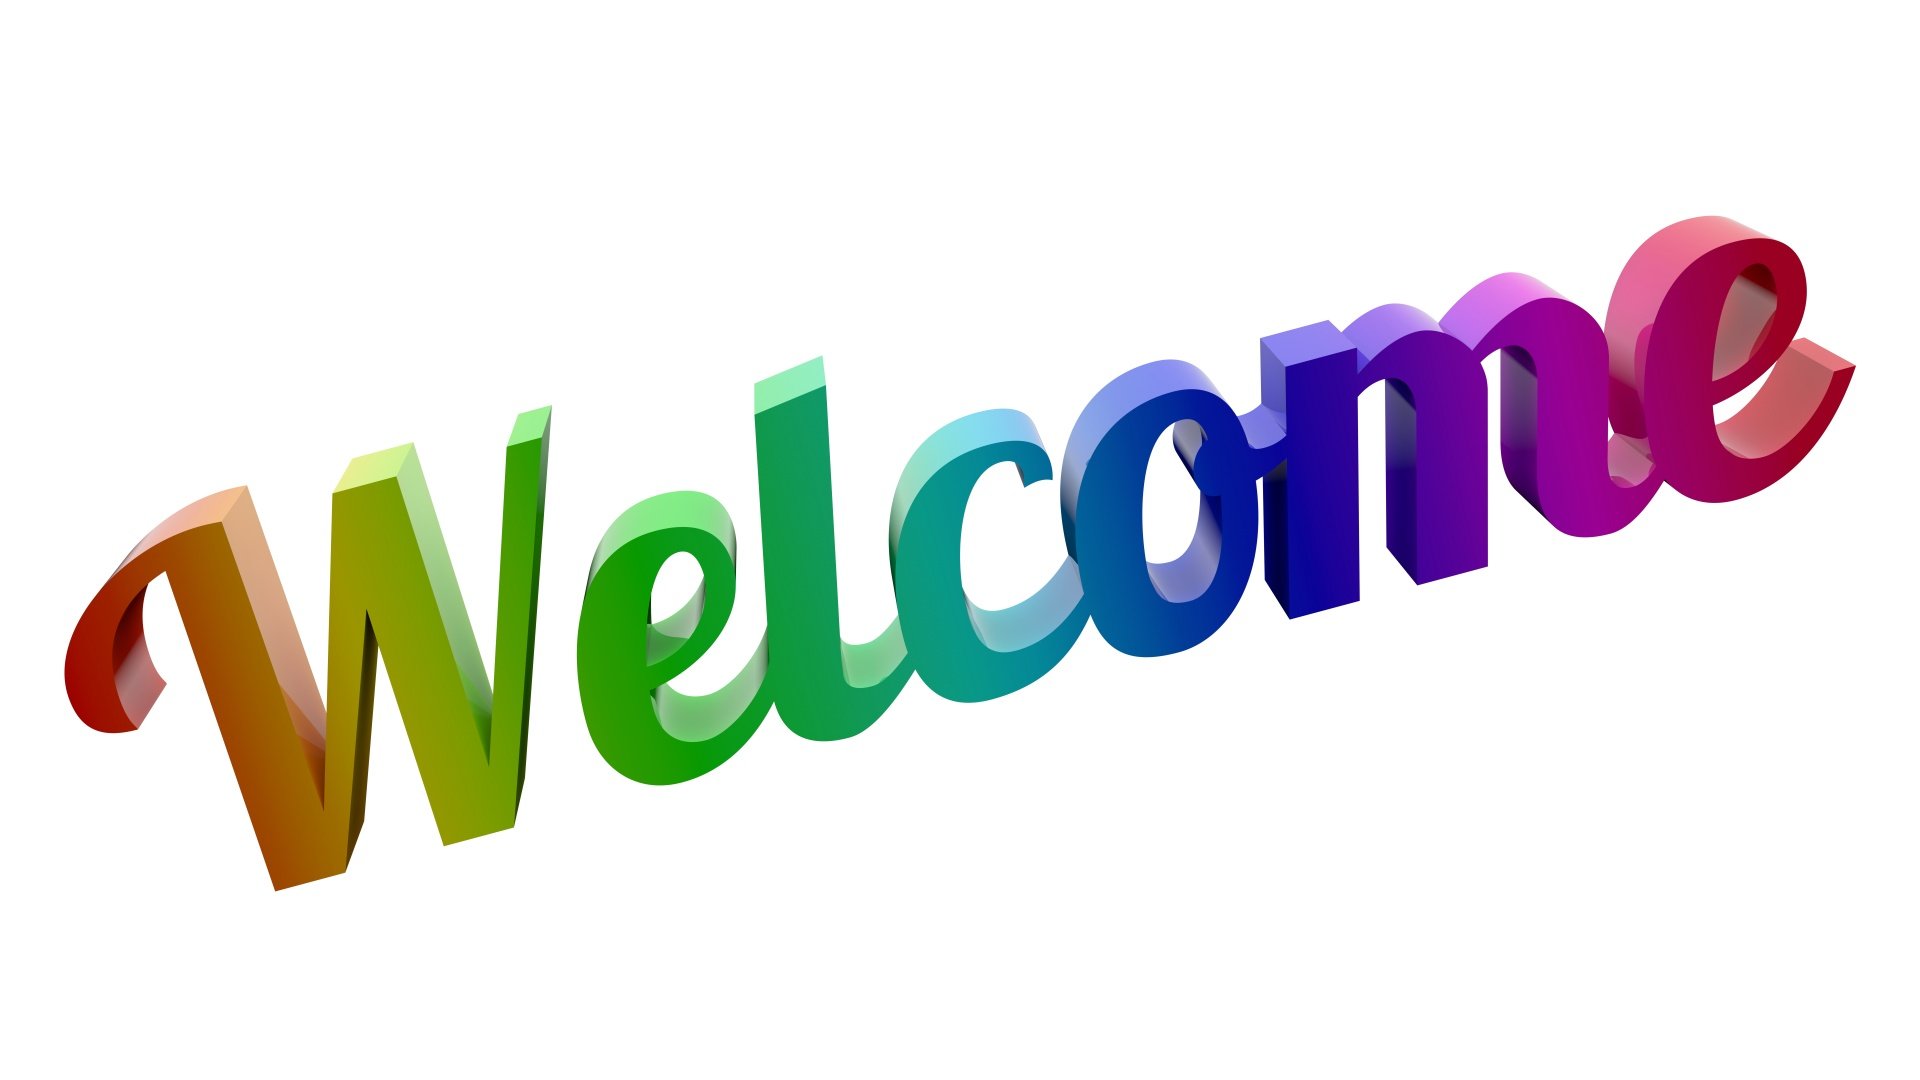 Welcome users. Надпись Welcome. Welcome картинка. Фон с надписью Welcome. Добро пожаловать на белом фоне.